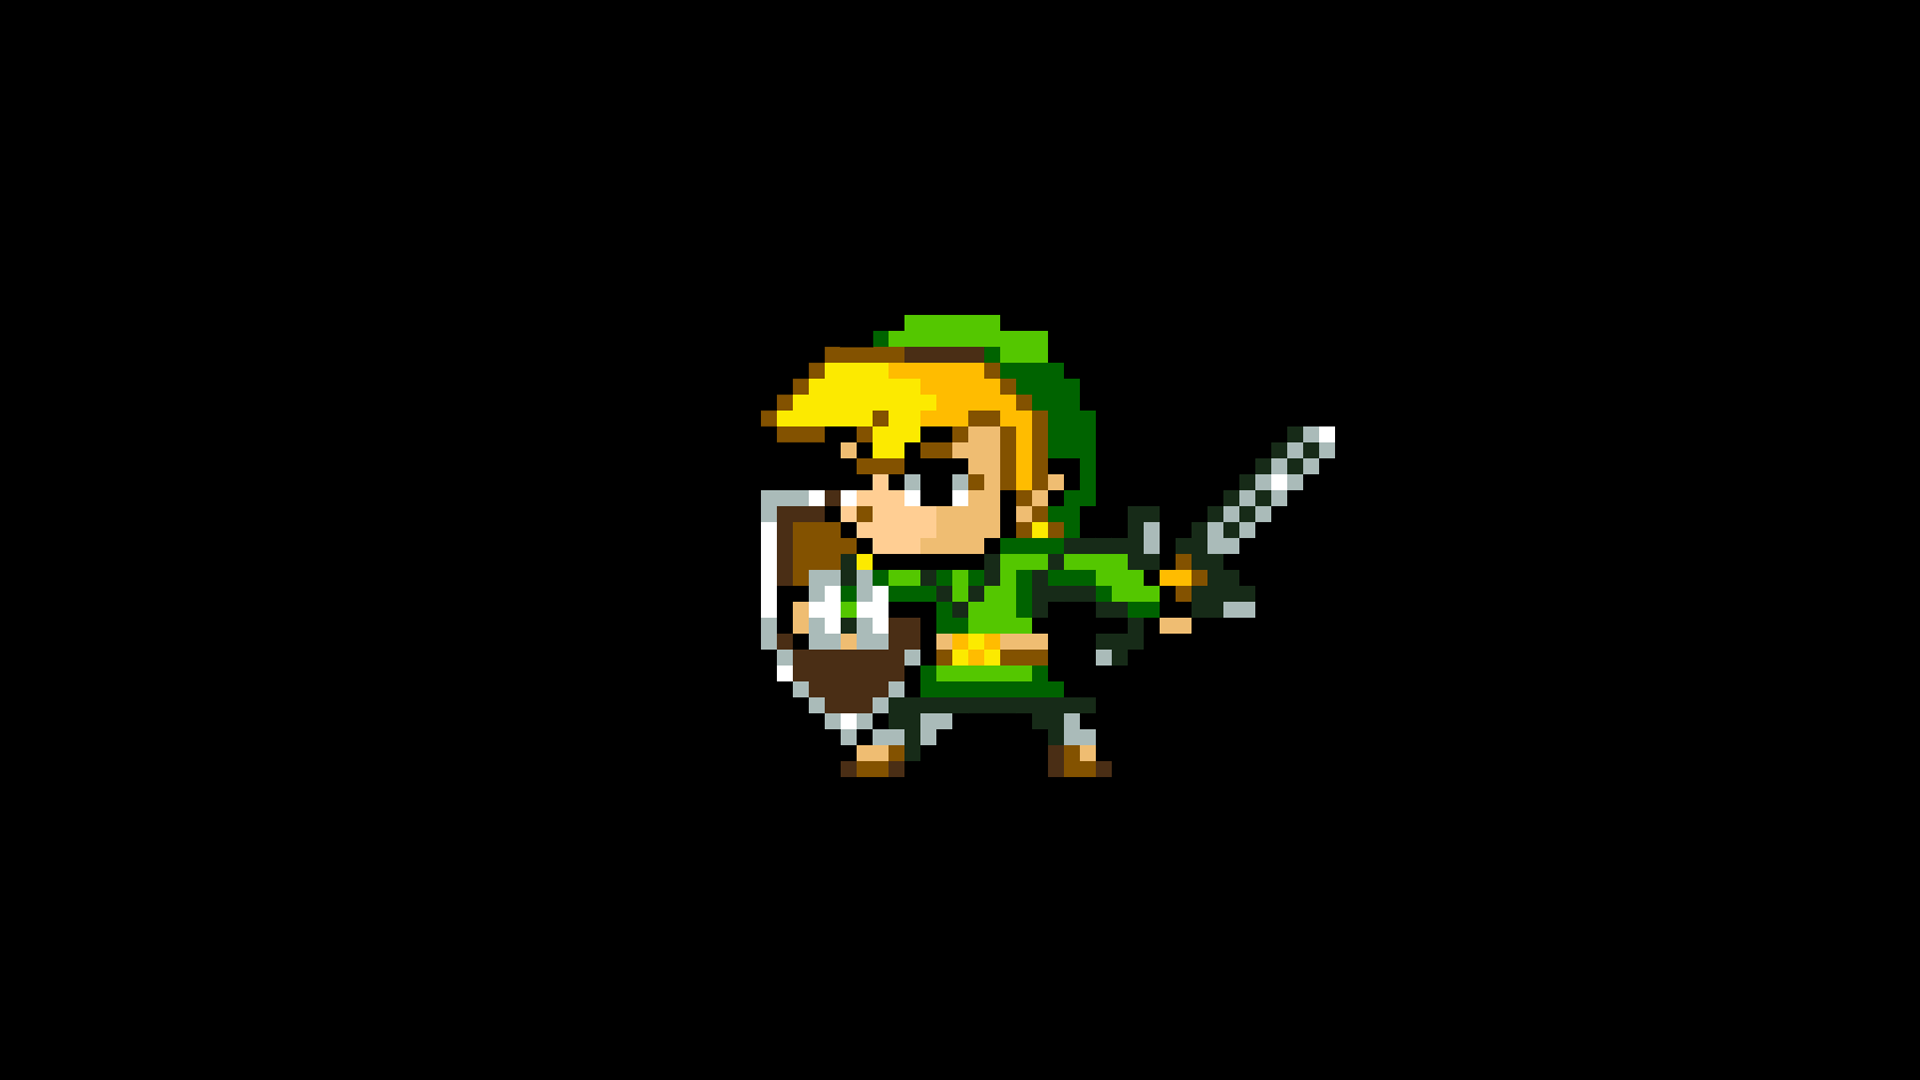 8 Bit The Legend Of Zelda Link Minimalism Pixels Video Games Simple Background Black Background Retr 1920x1080